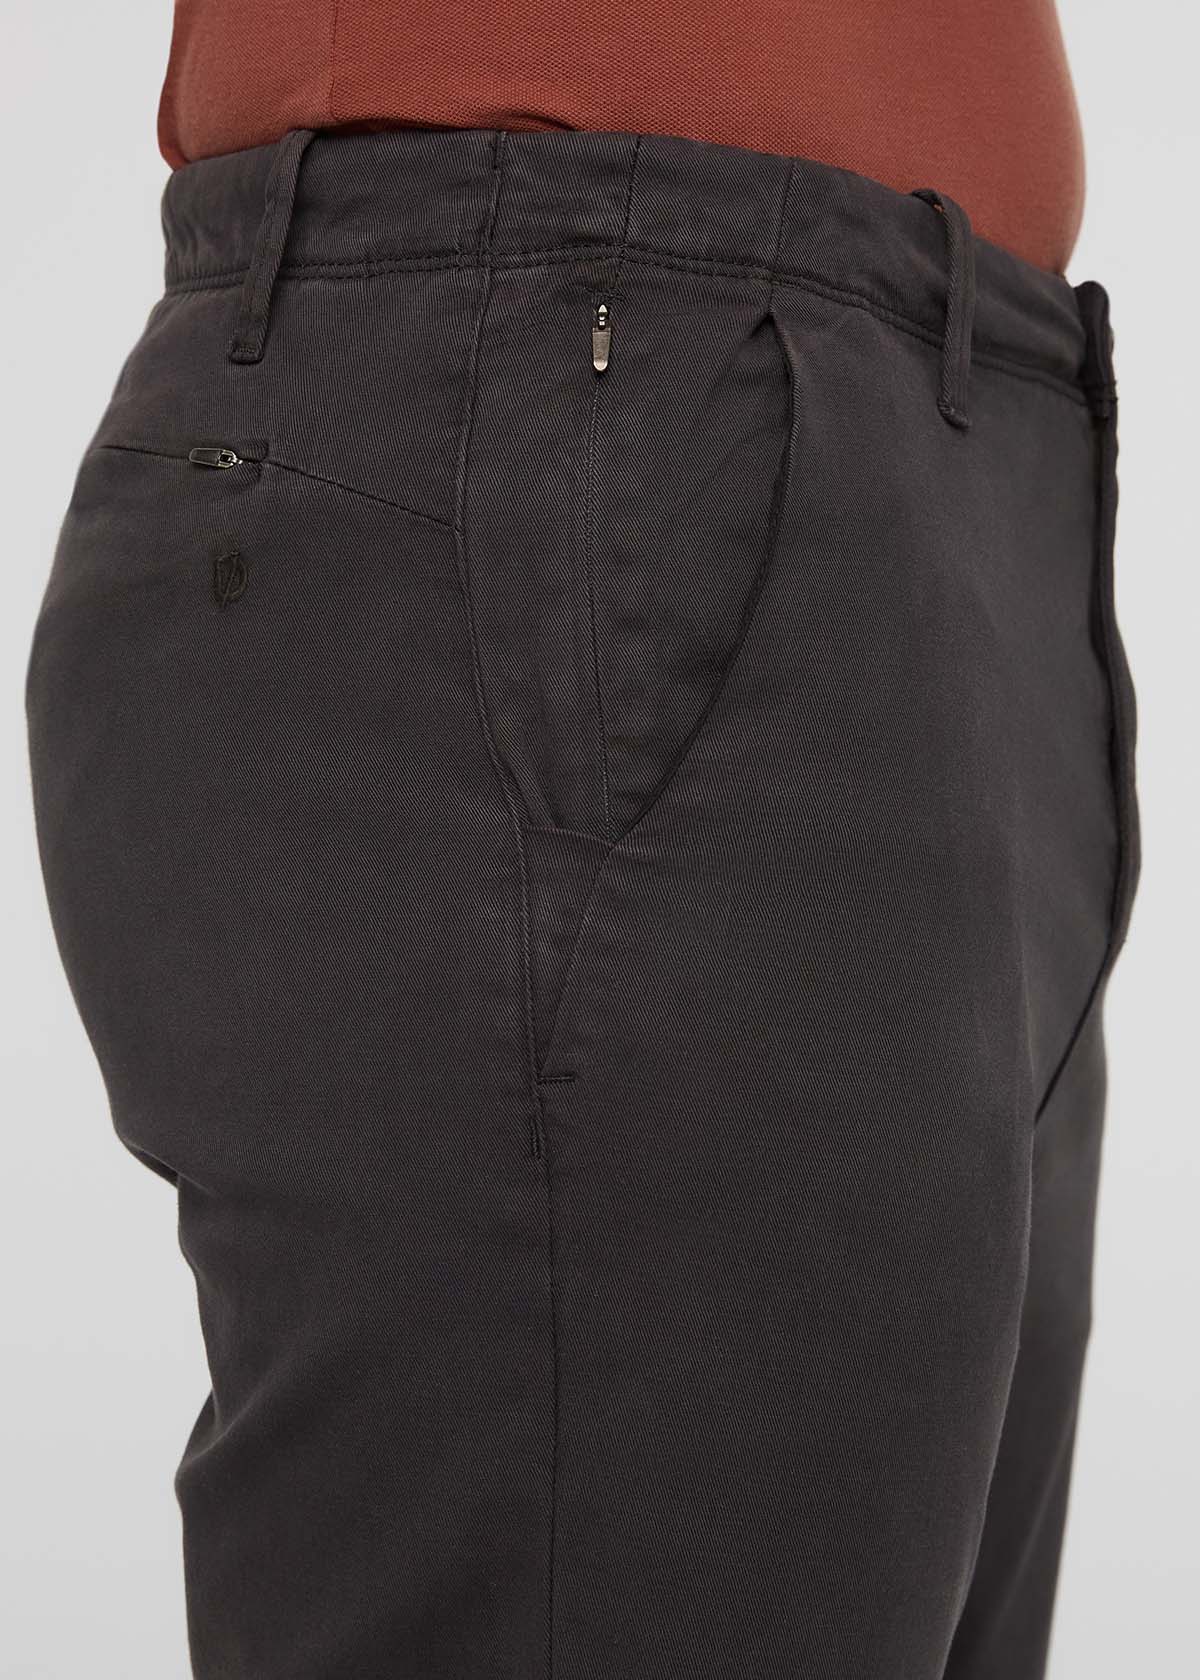 mens stretch dark grey chino pants side zip pocket